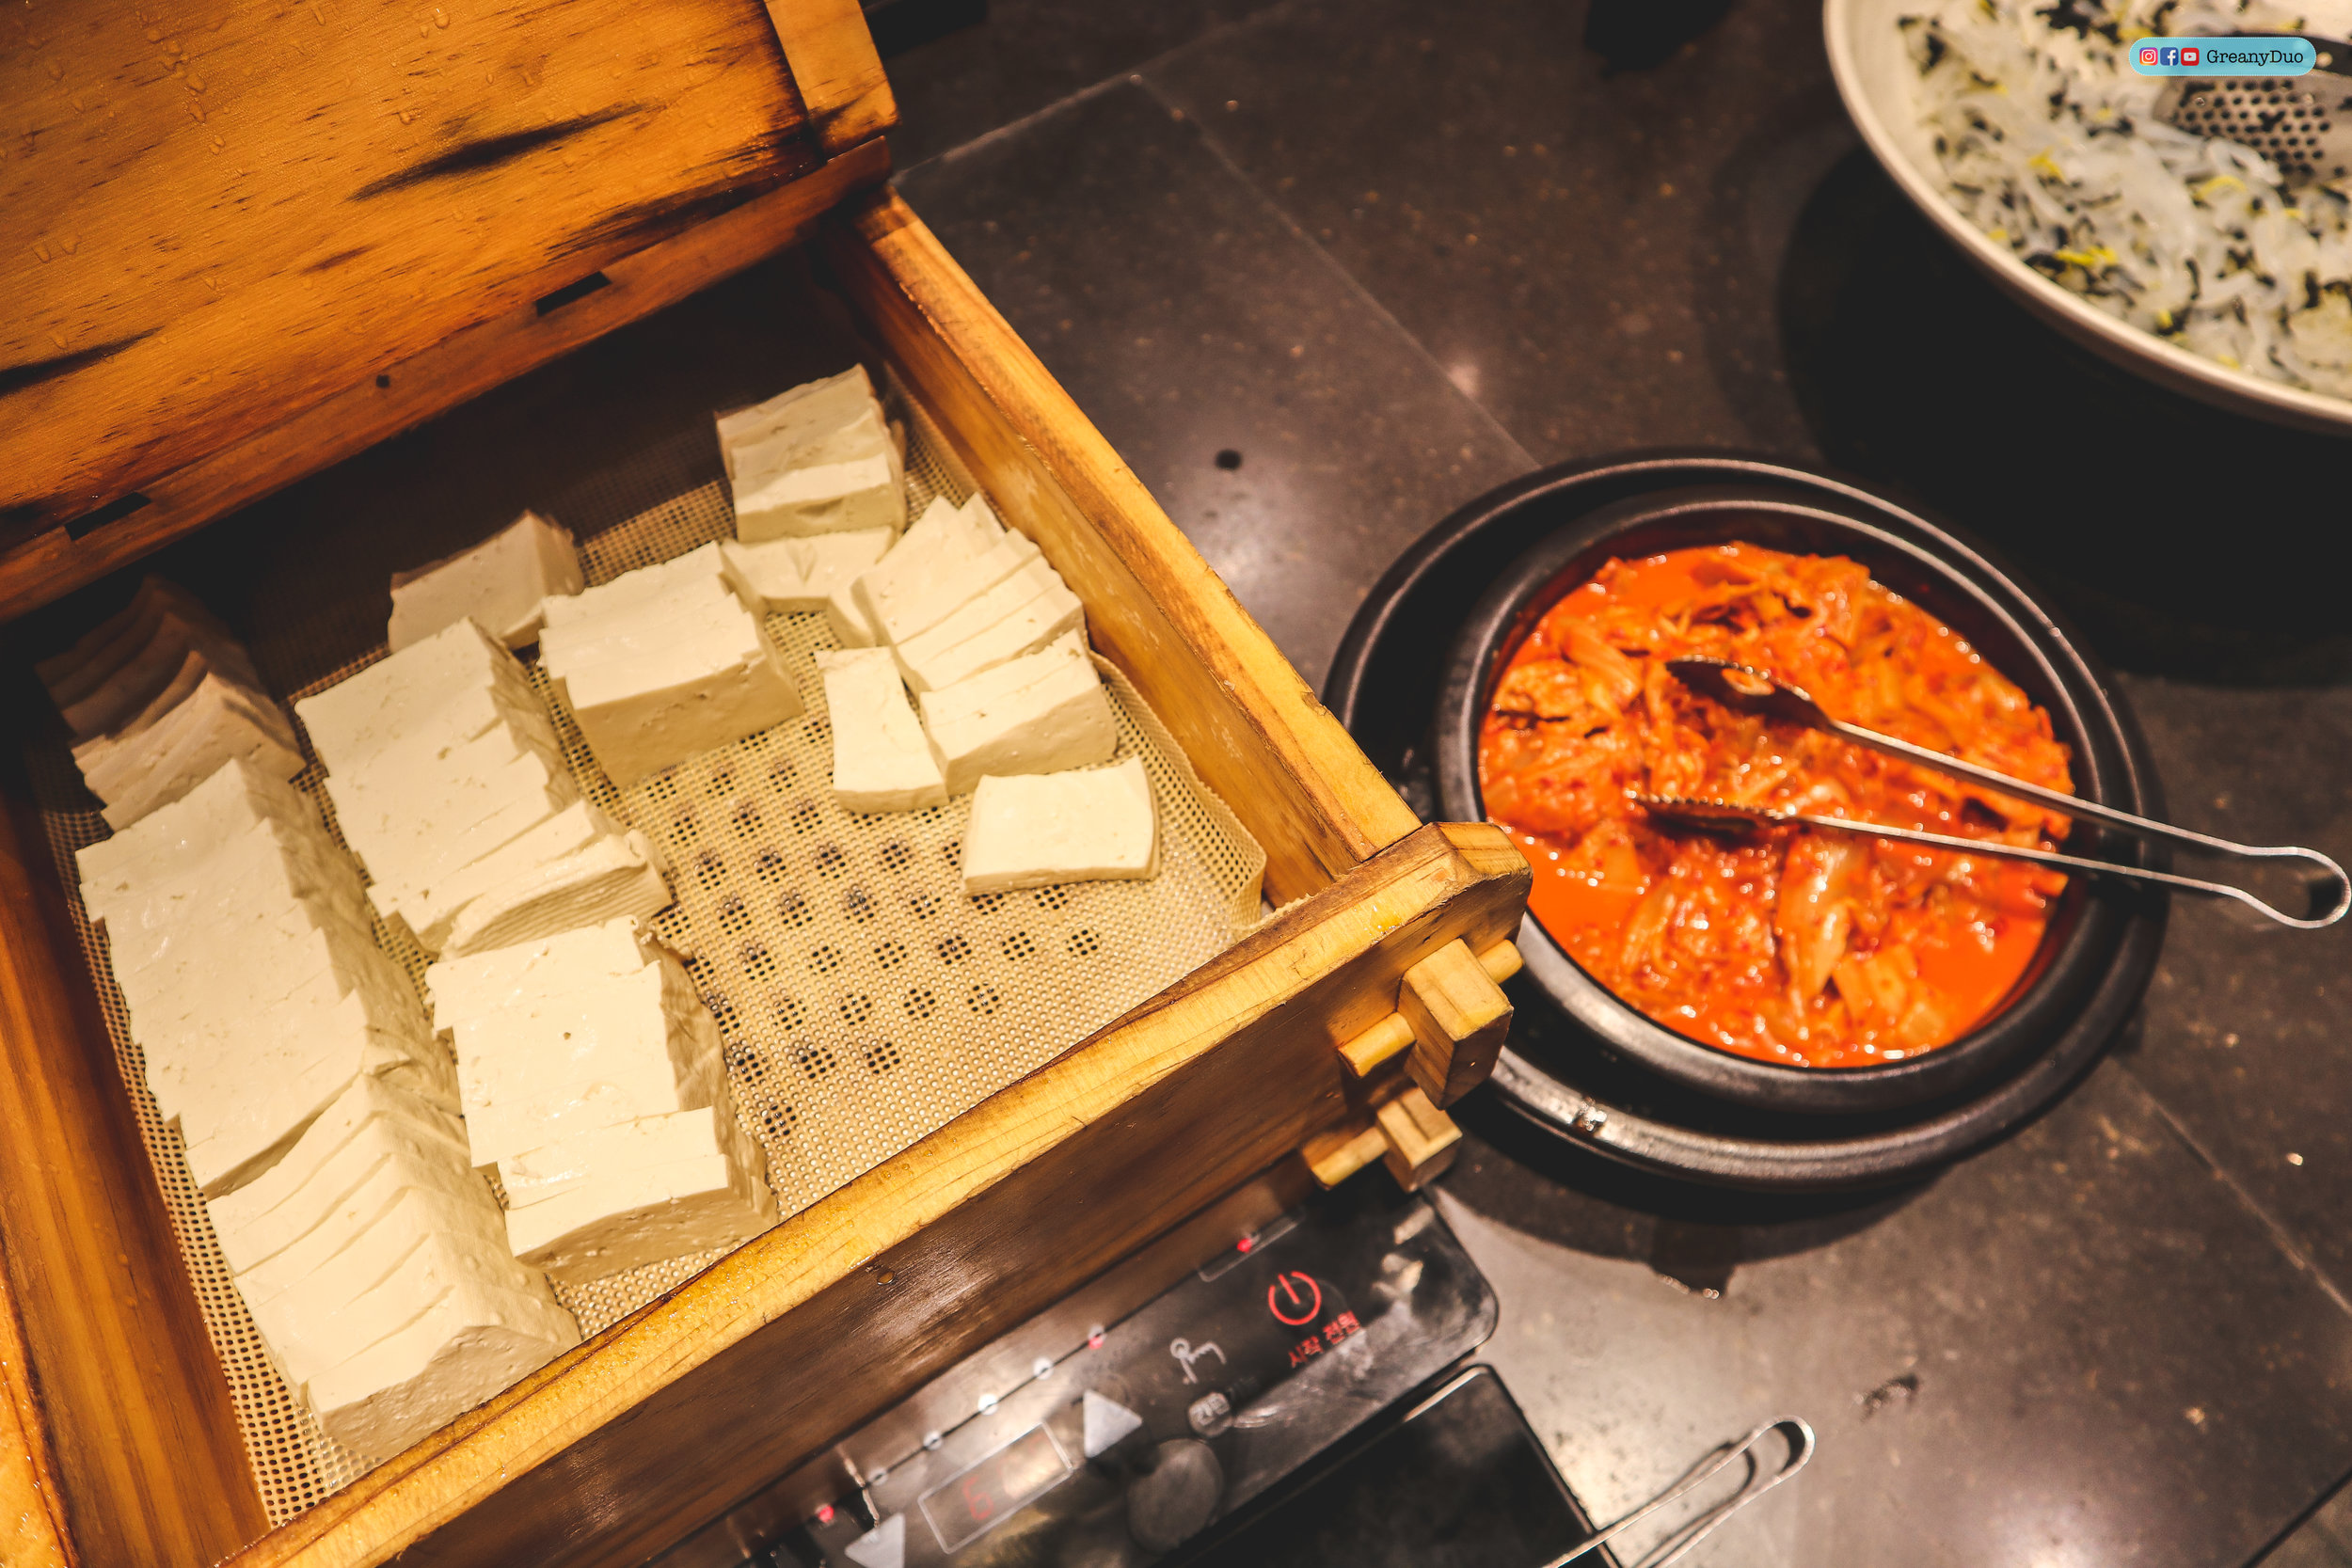 korean sidedishes at nature kitchen buffet, seoul korea